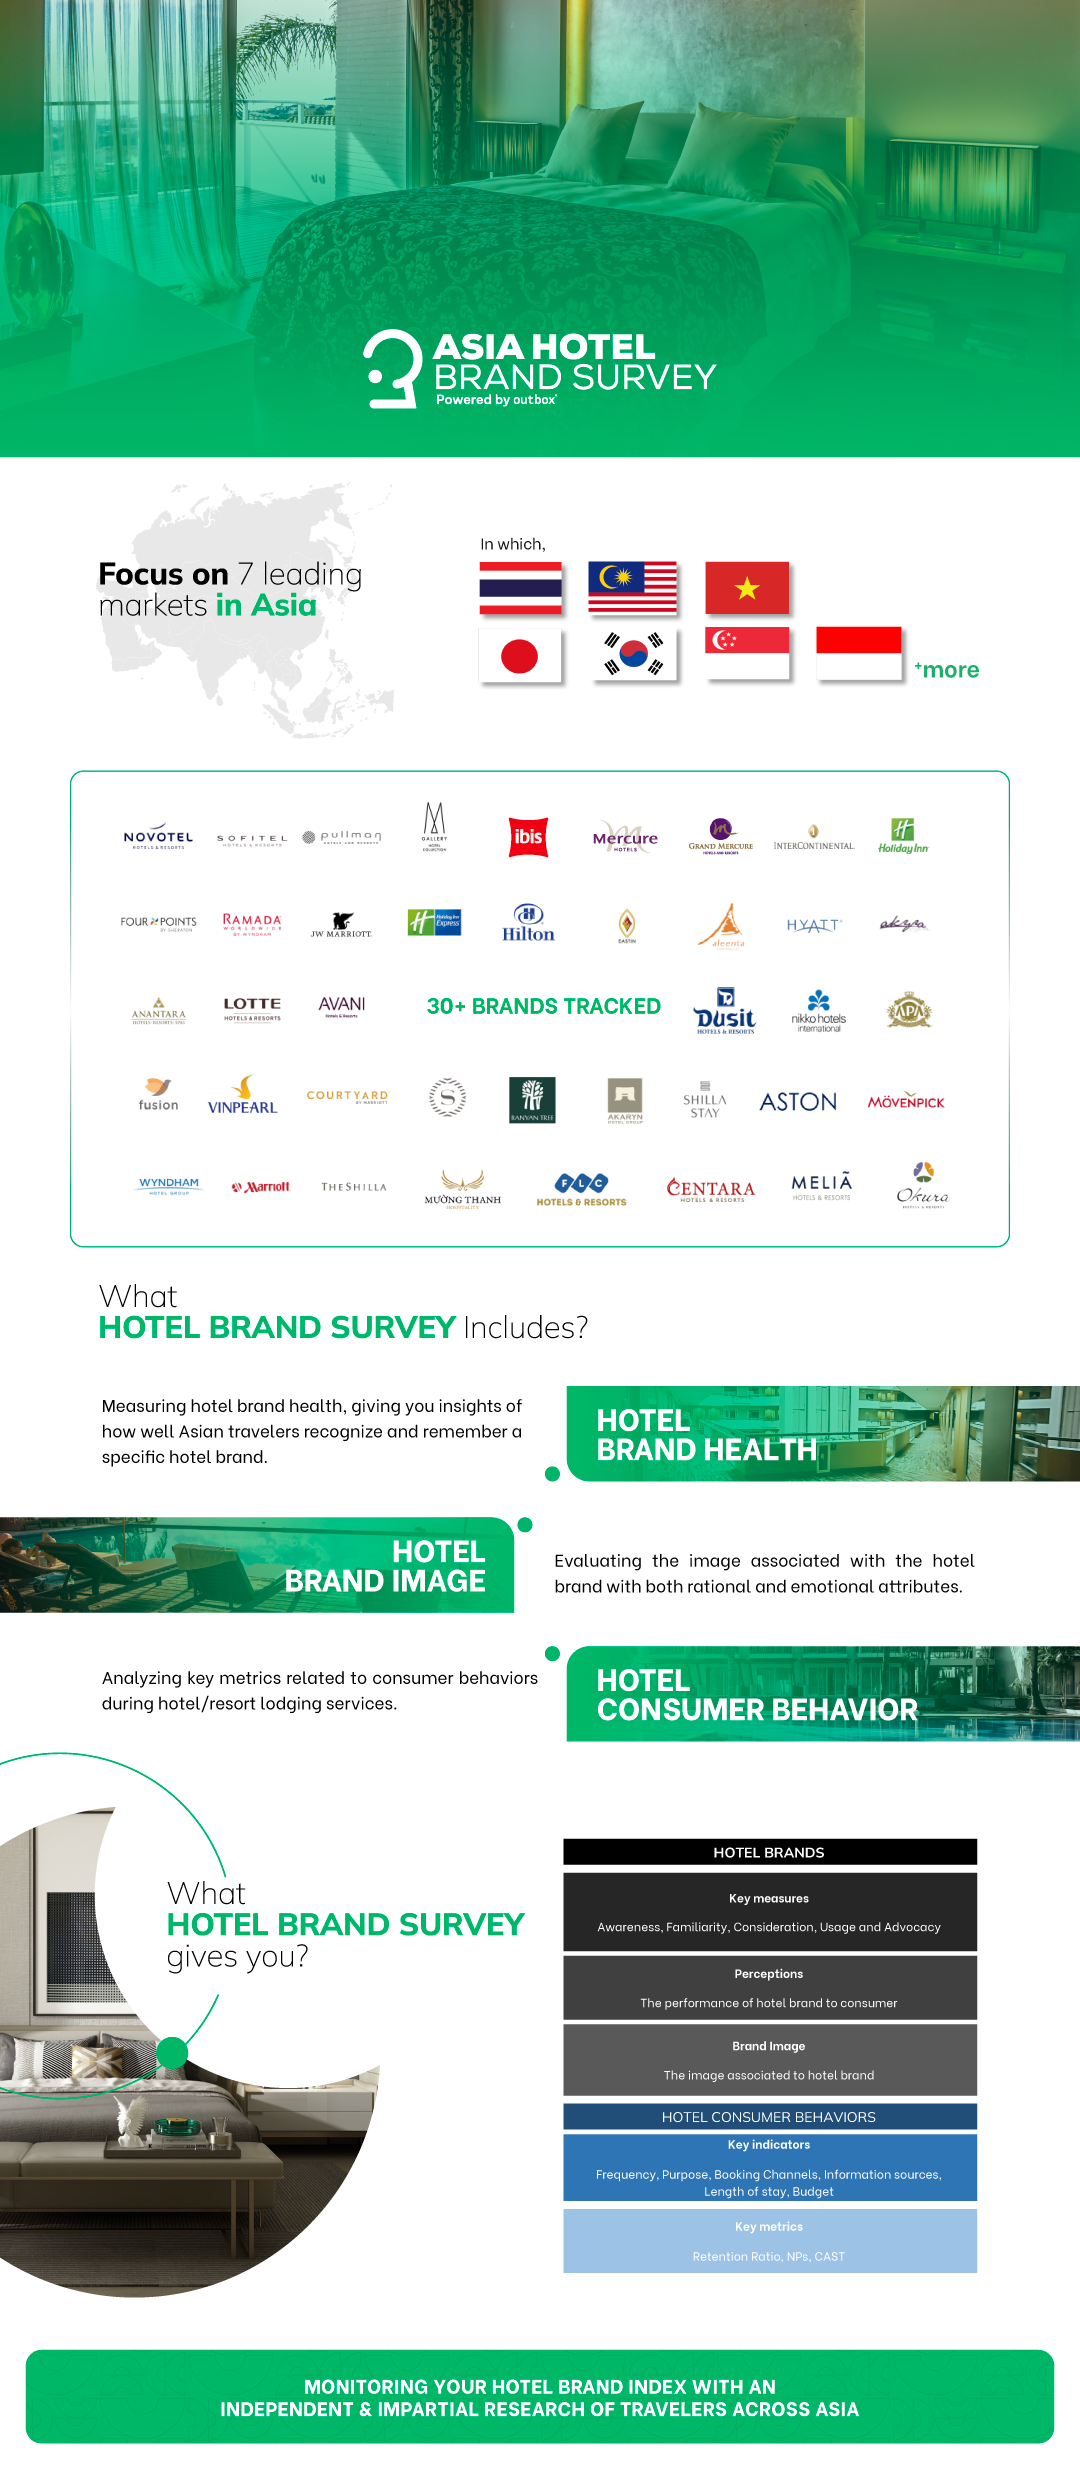 Asia Hotel Brand Survey